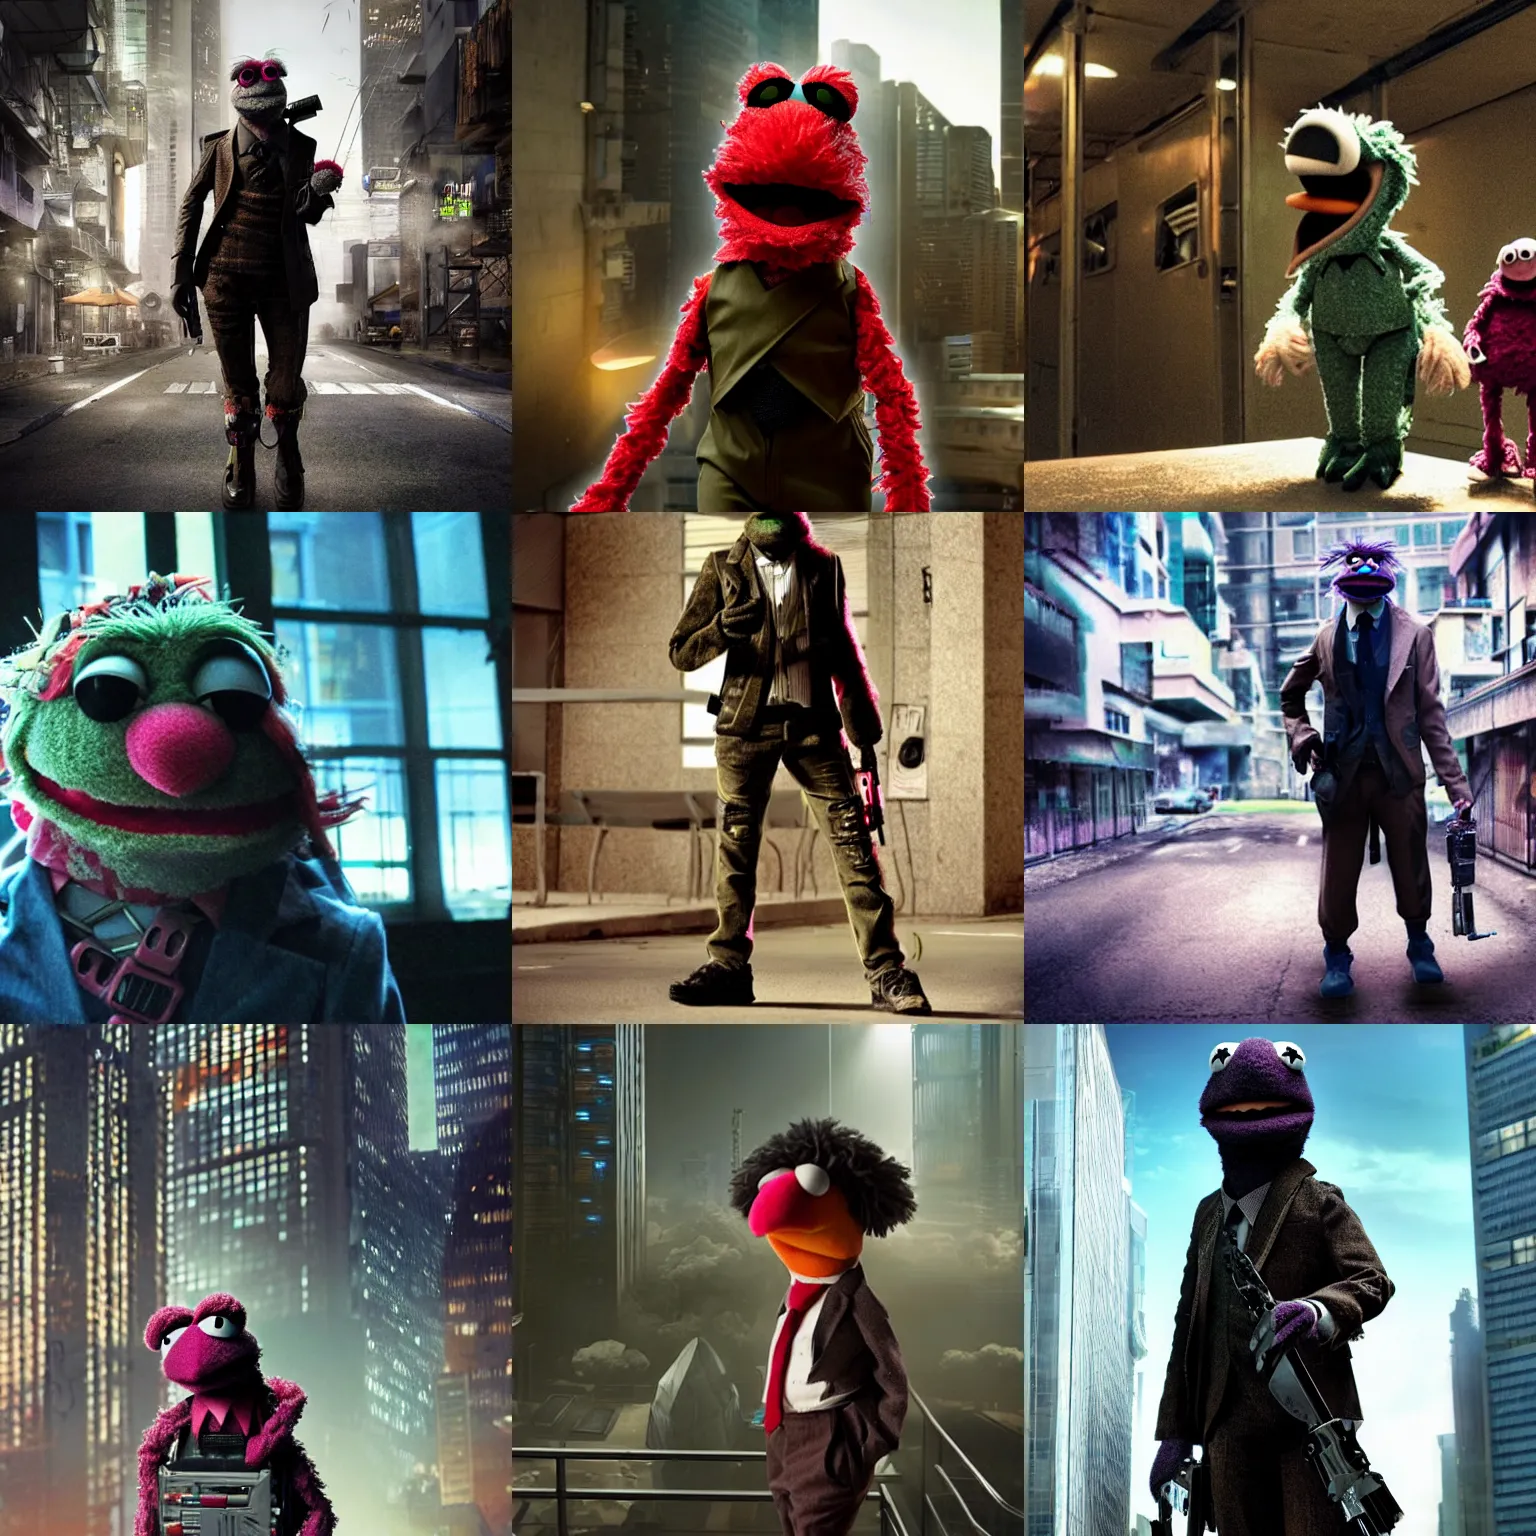 Prompt: A muppet assassin cyberpunk, realistic film still